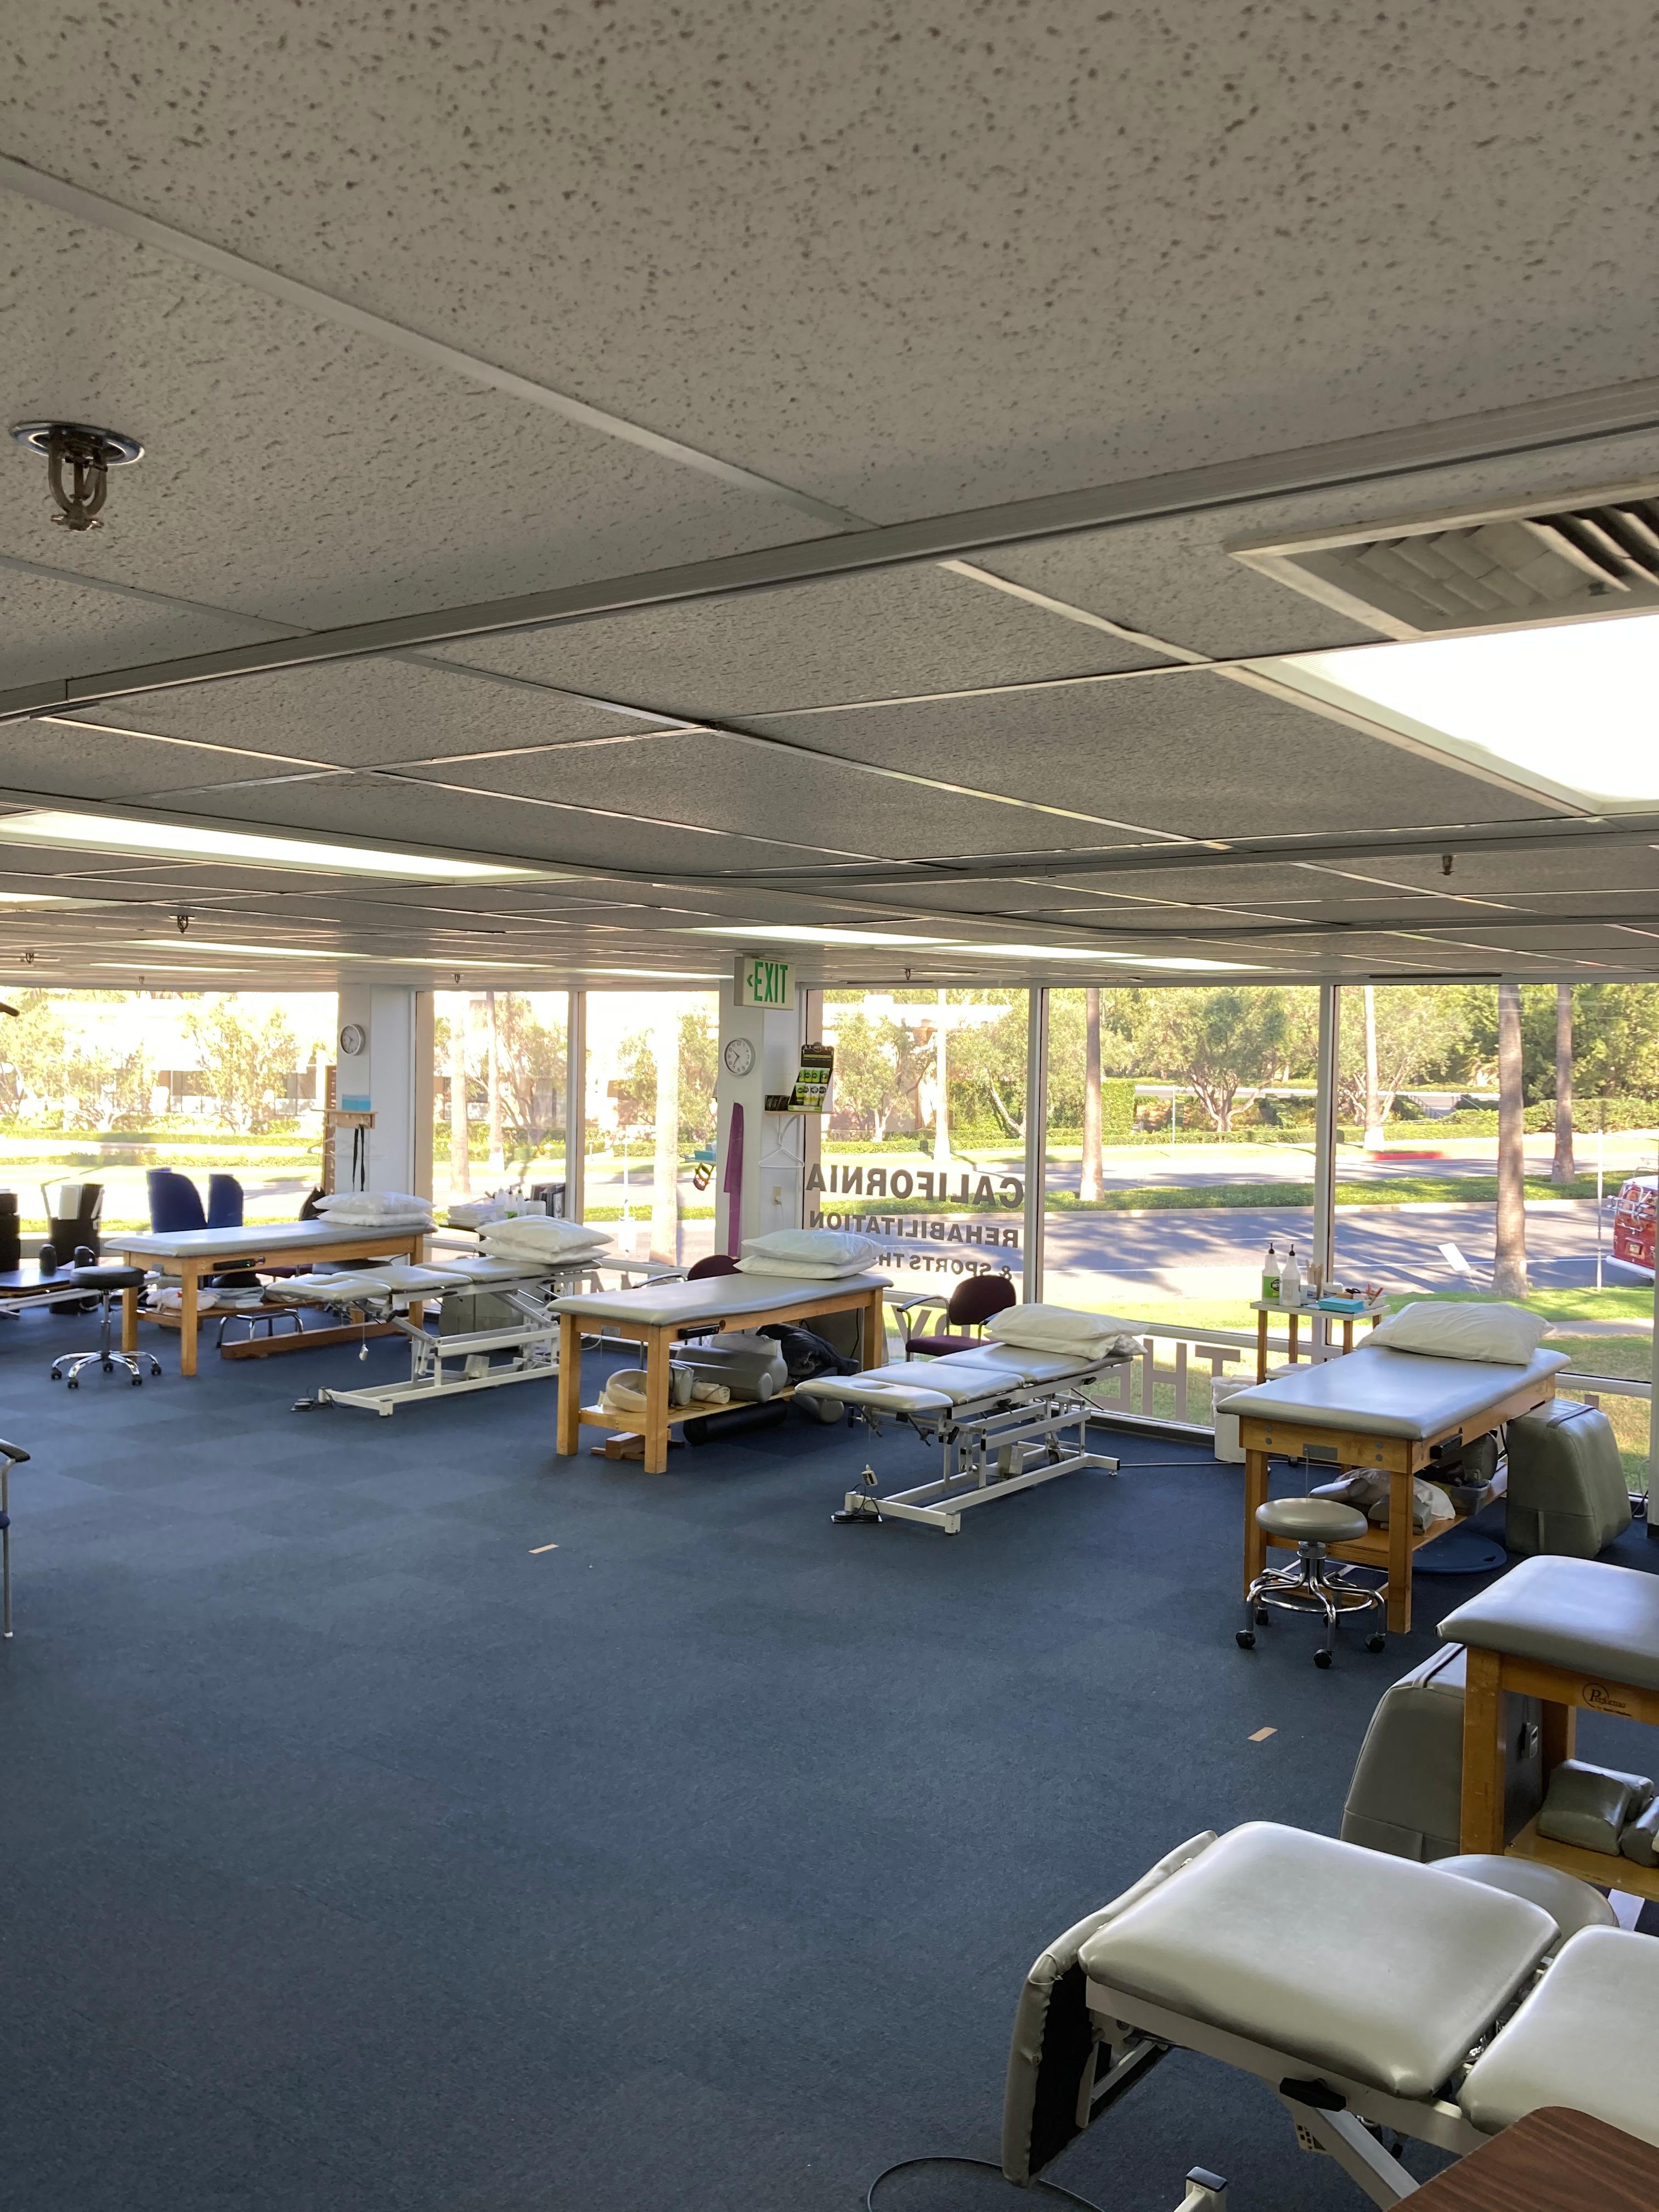 California Rehabilitation and Sports Therapy
200 Newport Center Dr
Newport Beach California Rehabilitation and Sports Therapy - Newport Beach Newport Beach (949)644-1322